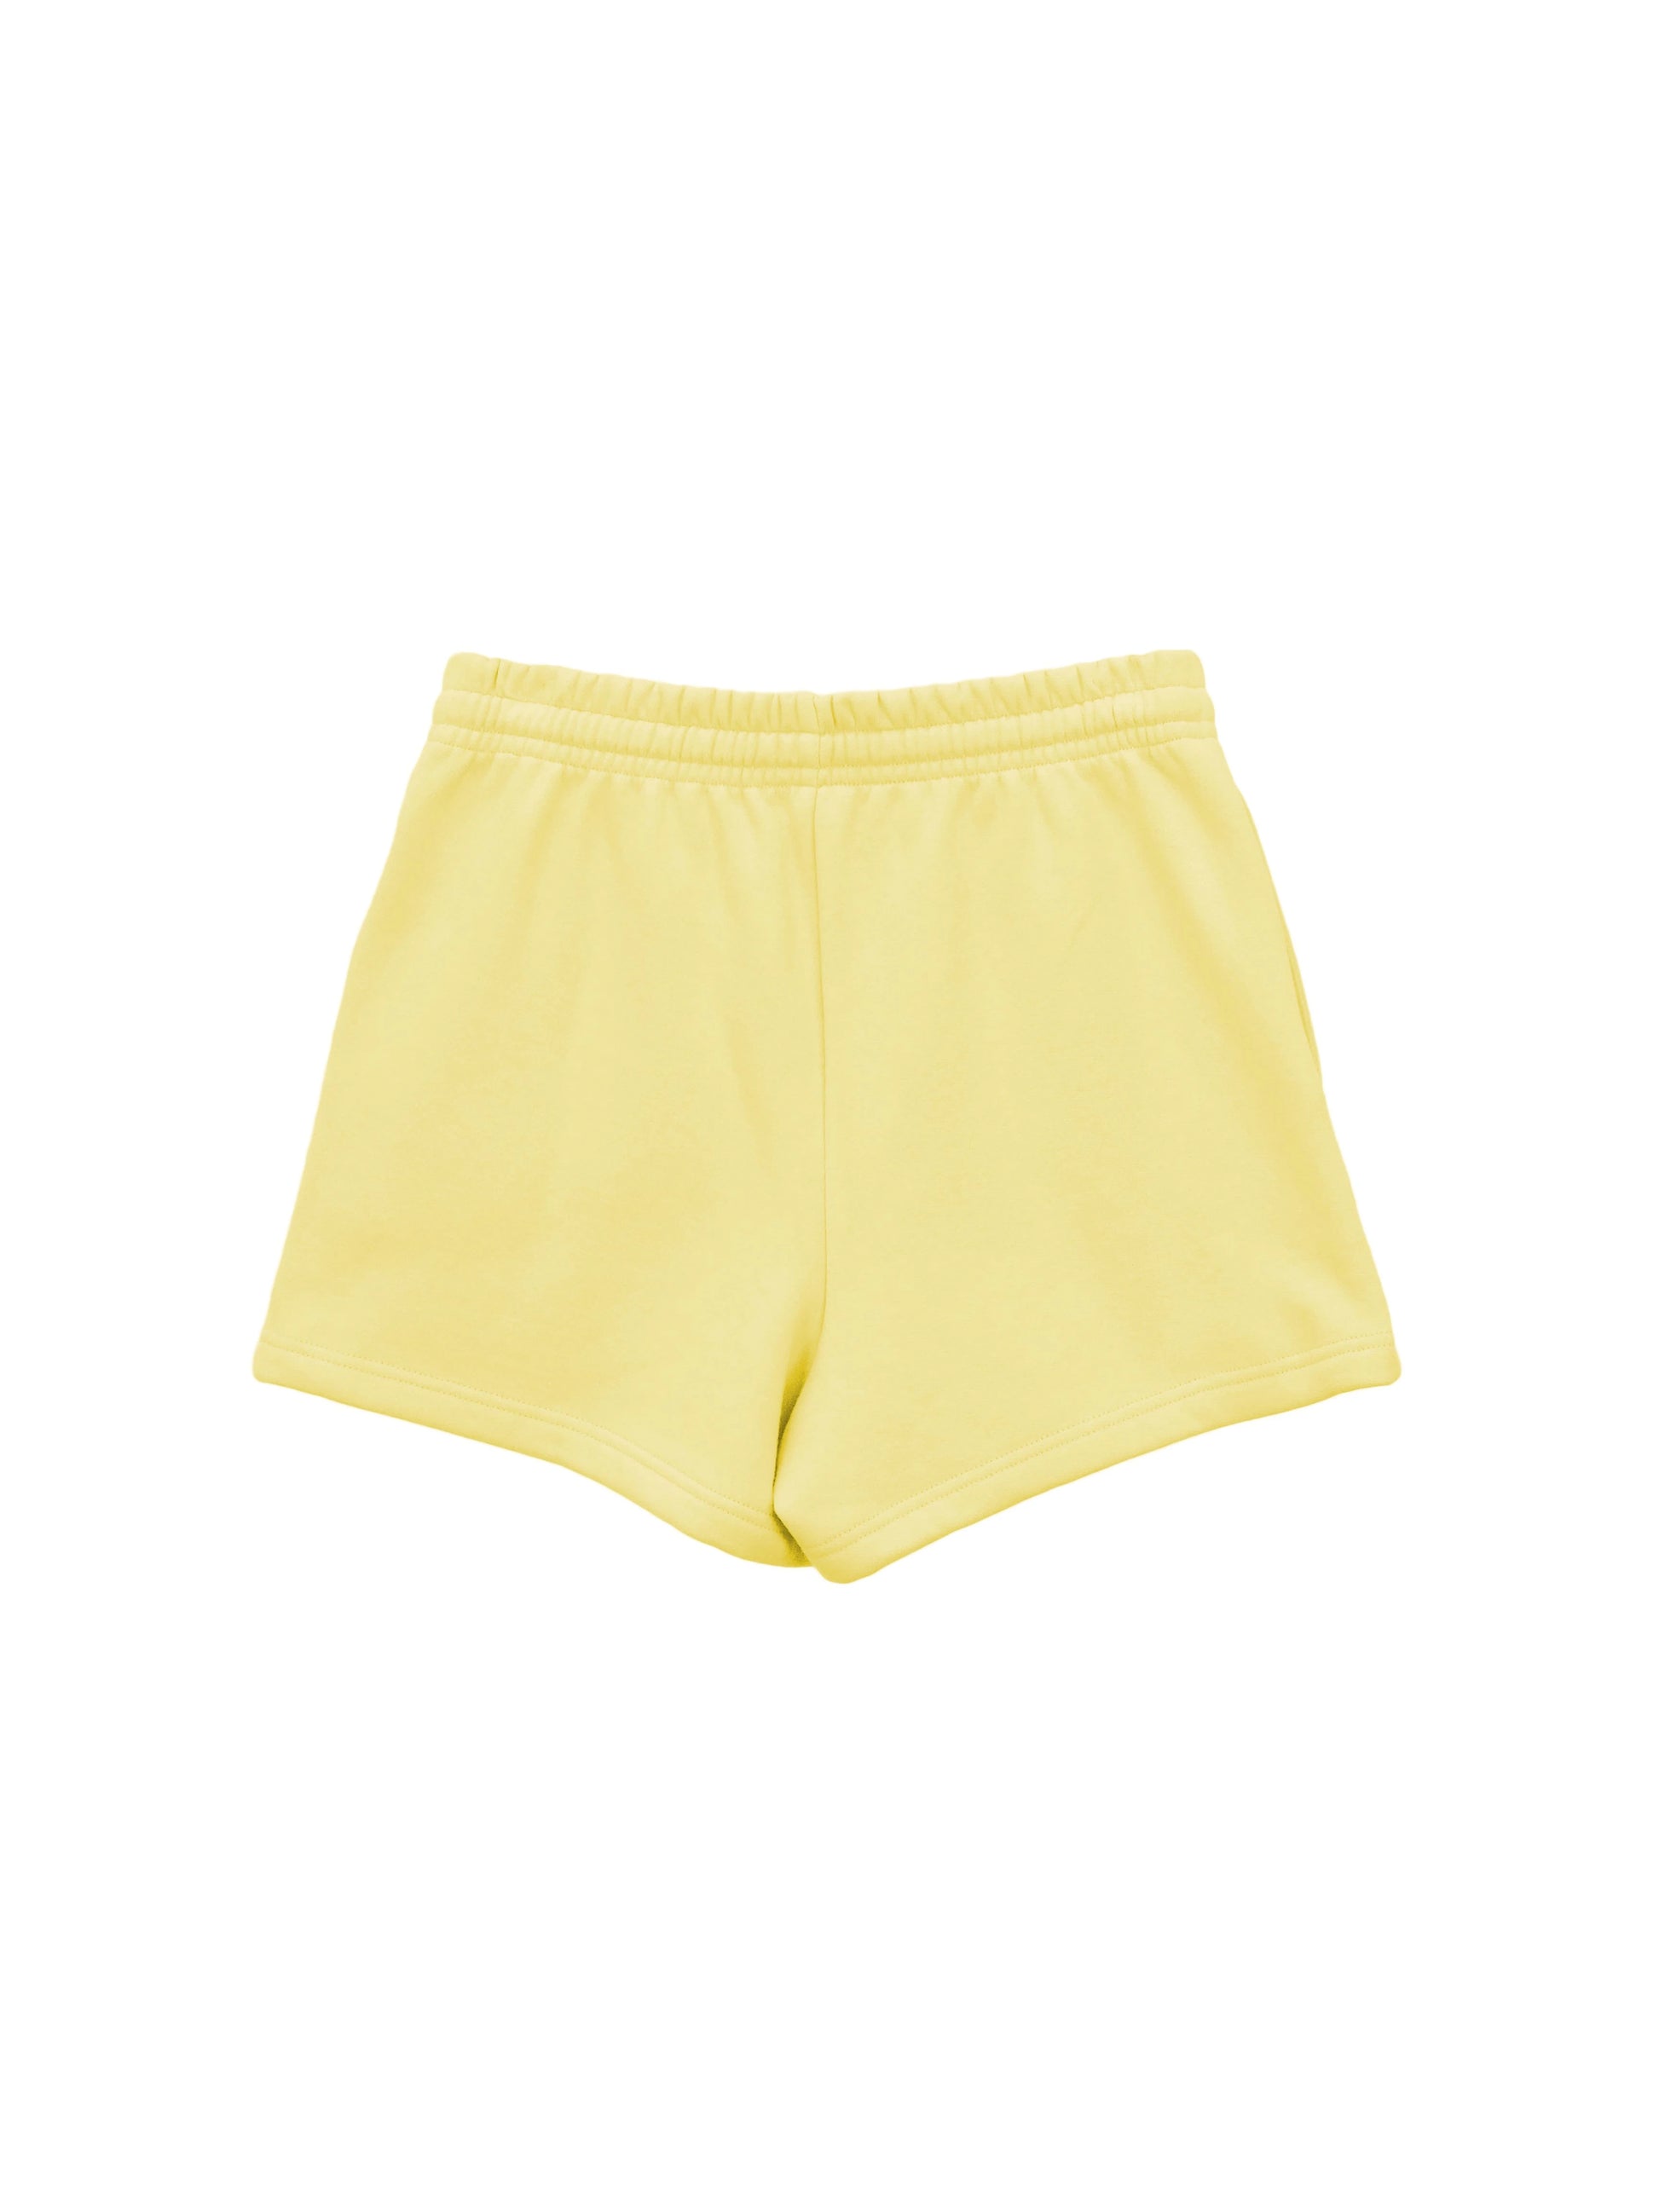 Back of yellow mini shorts